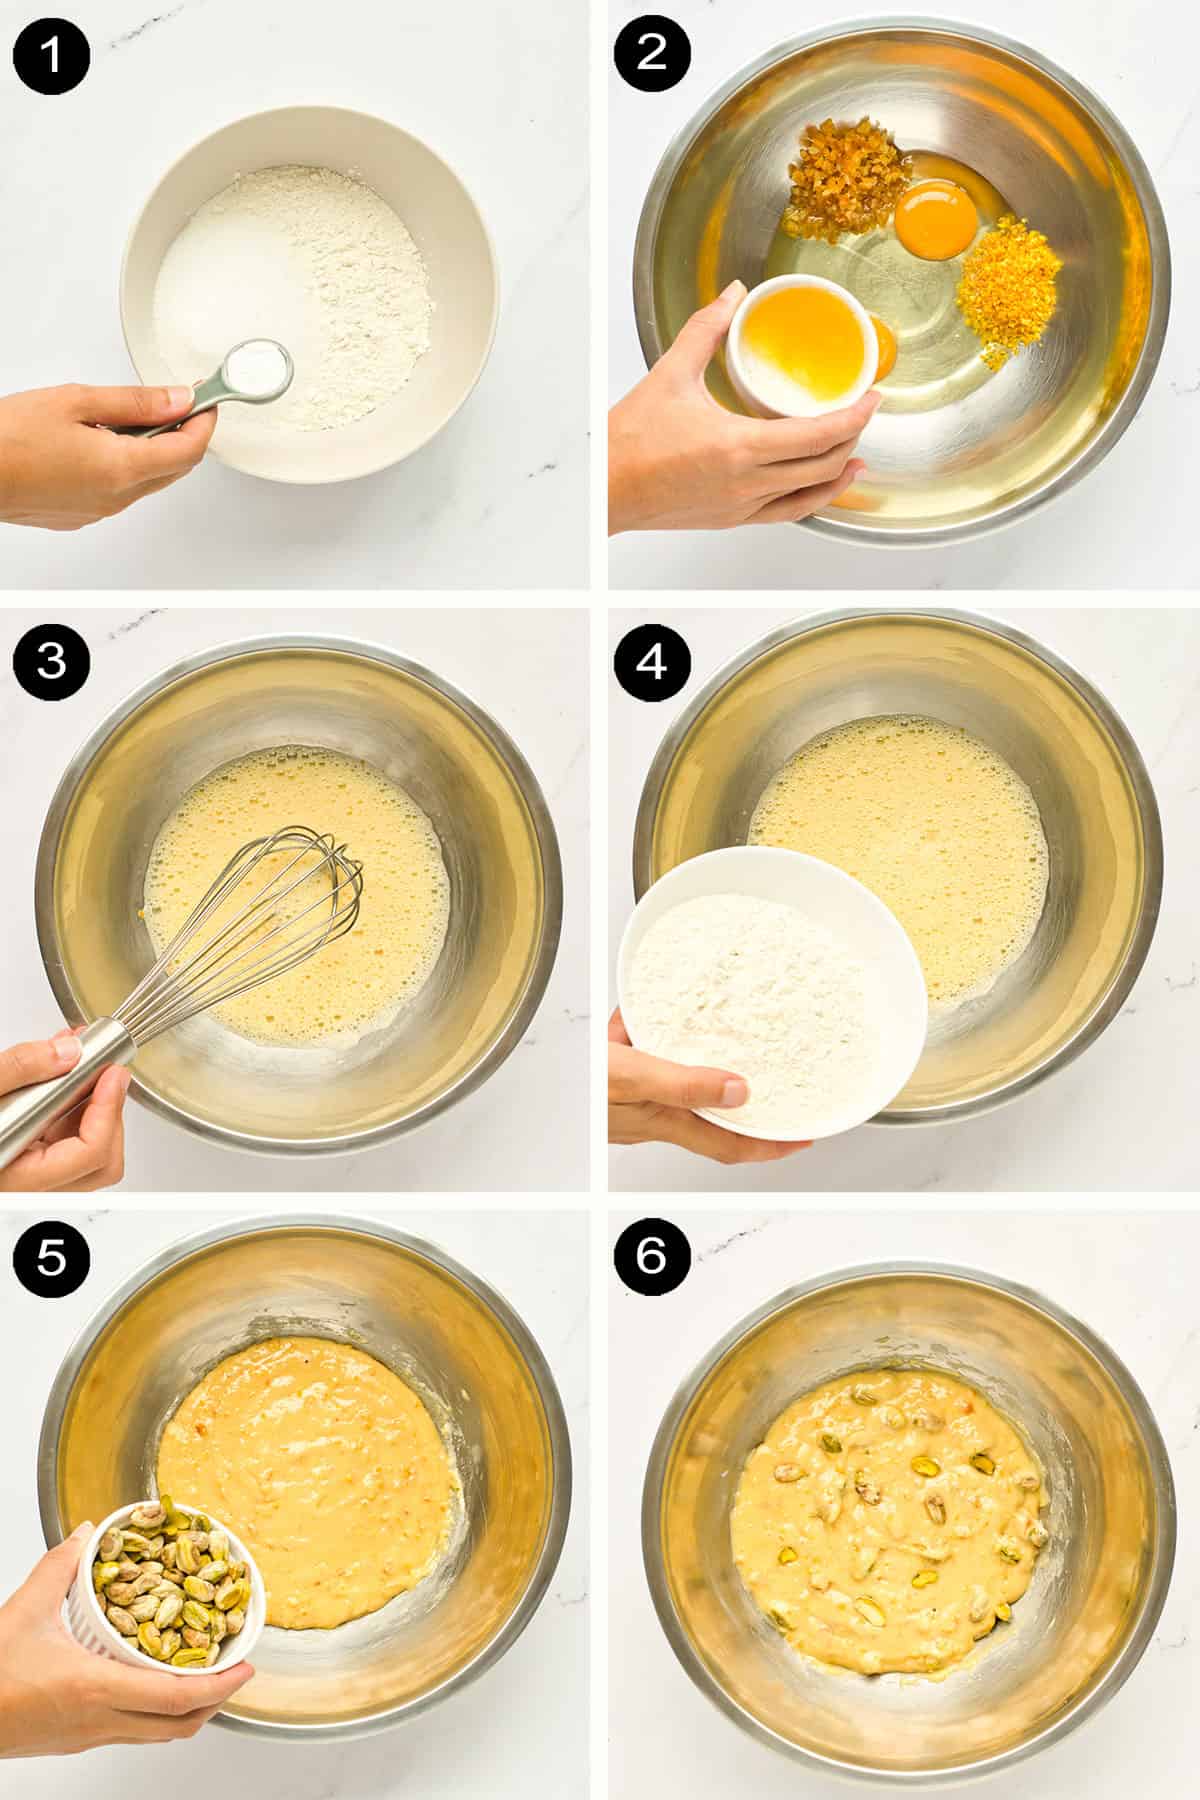 Steps to make biscotti dough.